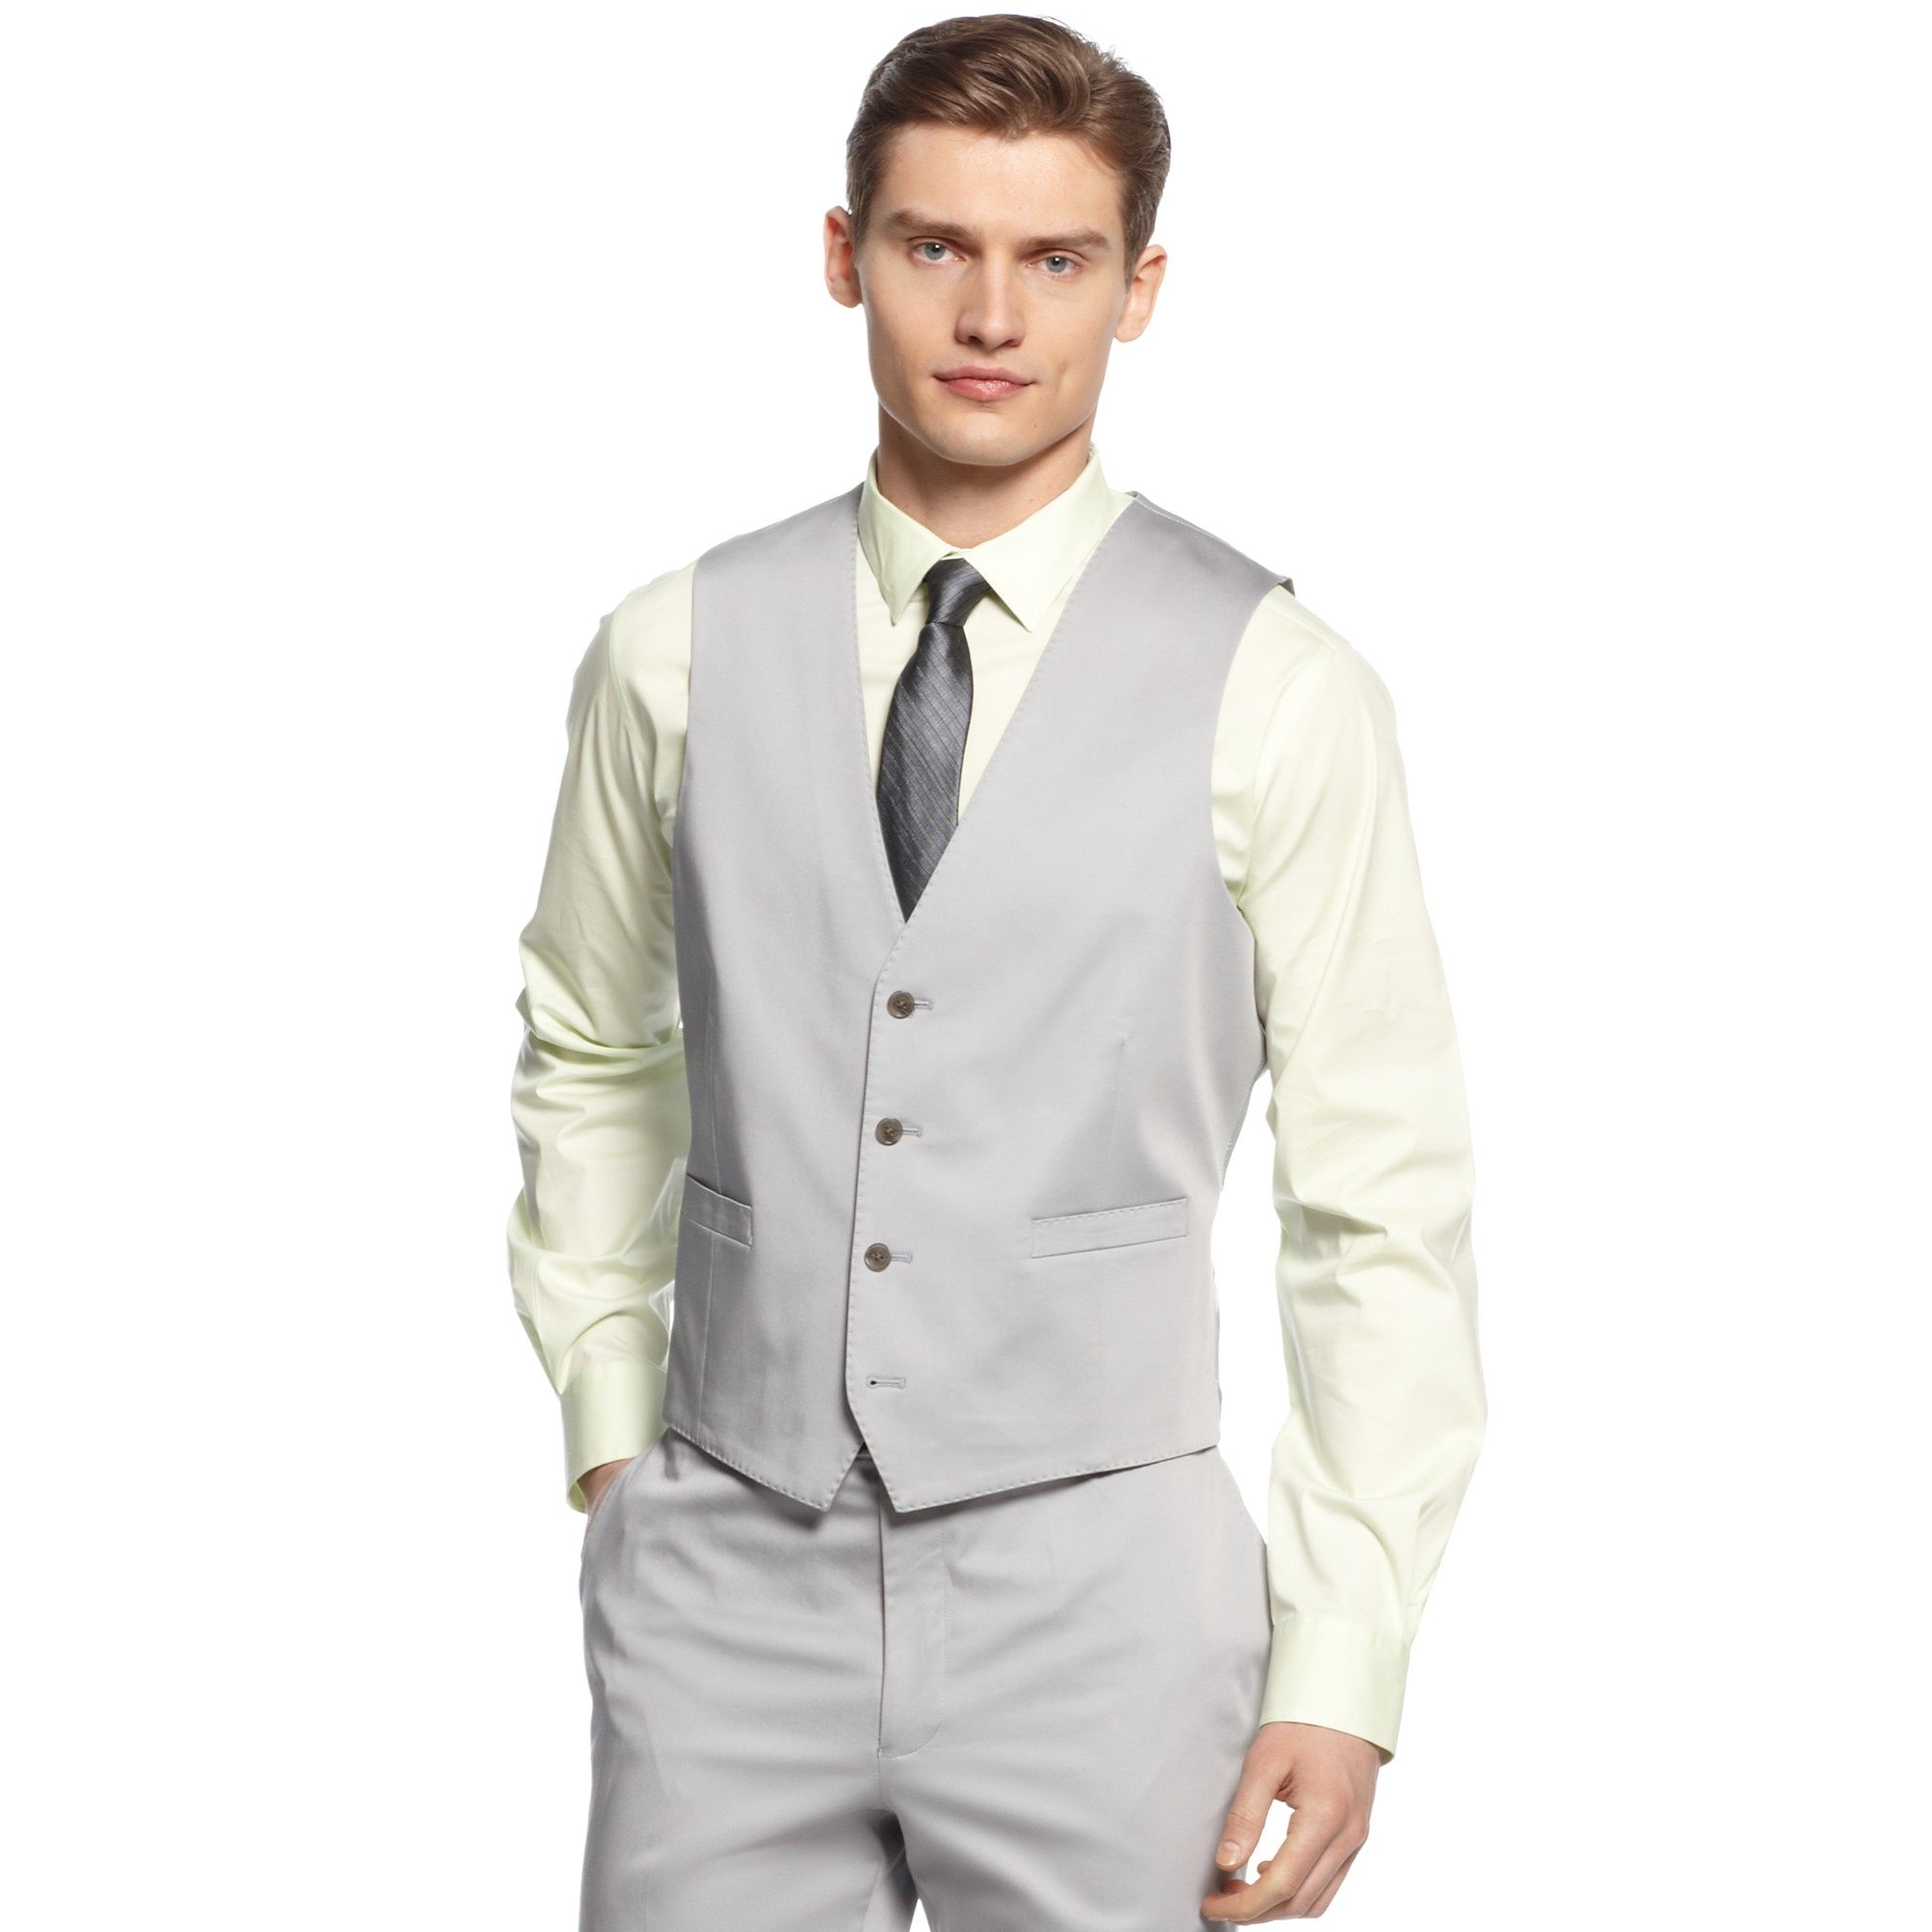 Calvin Klein Light Grey Vested Peak Slim Fit in Gray for Men - Lyst